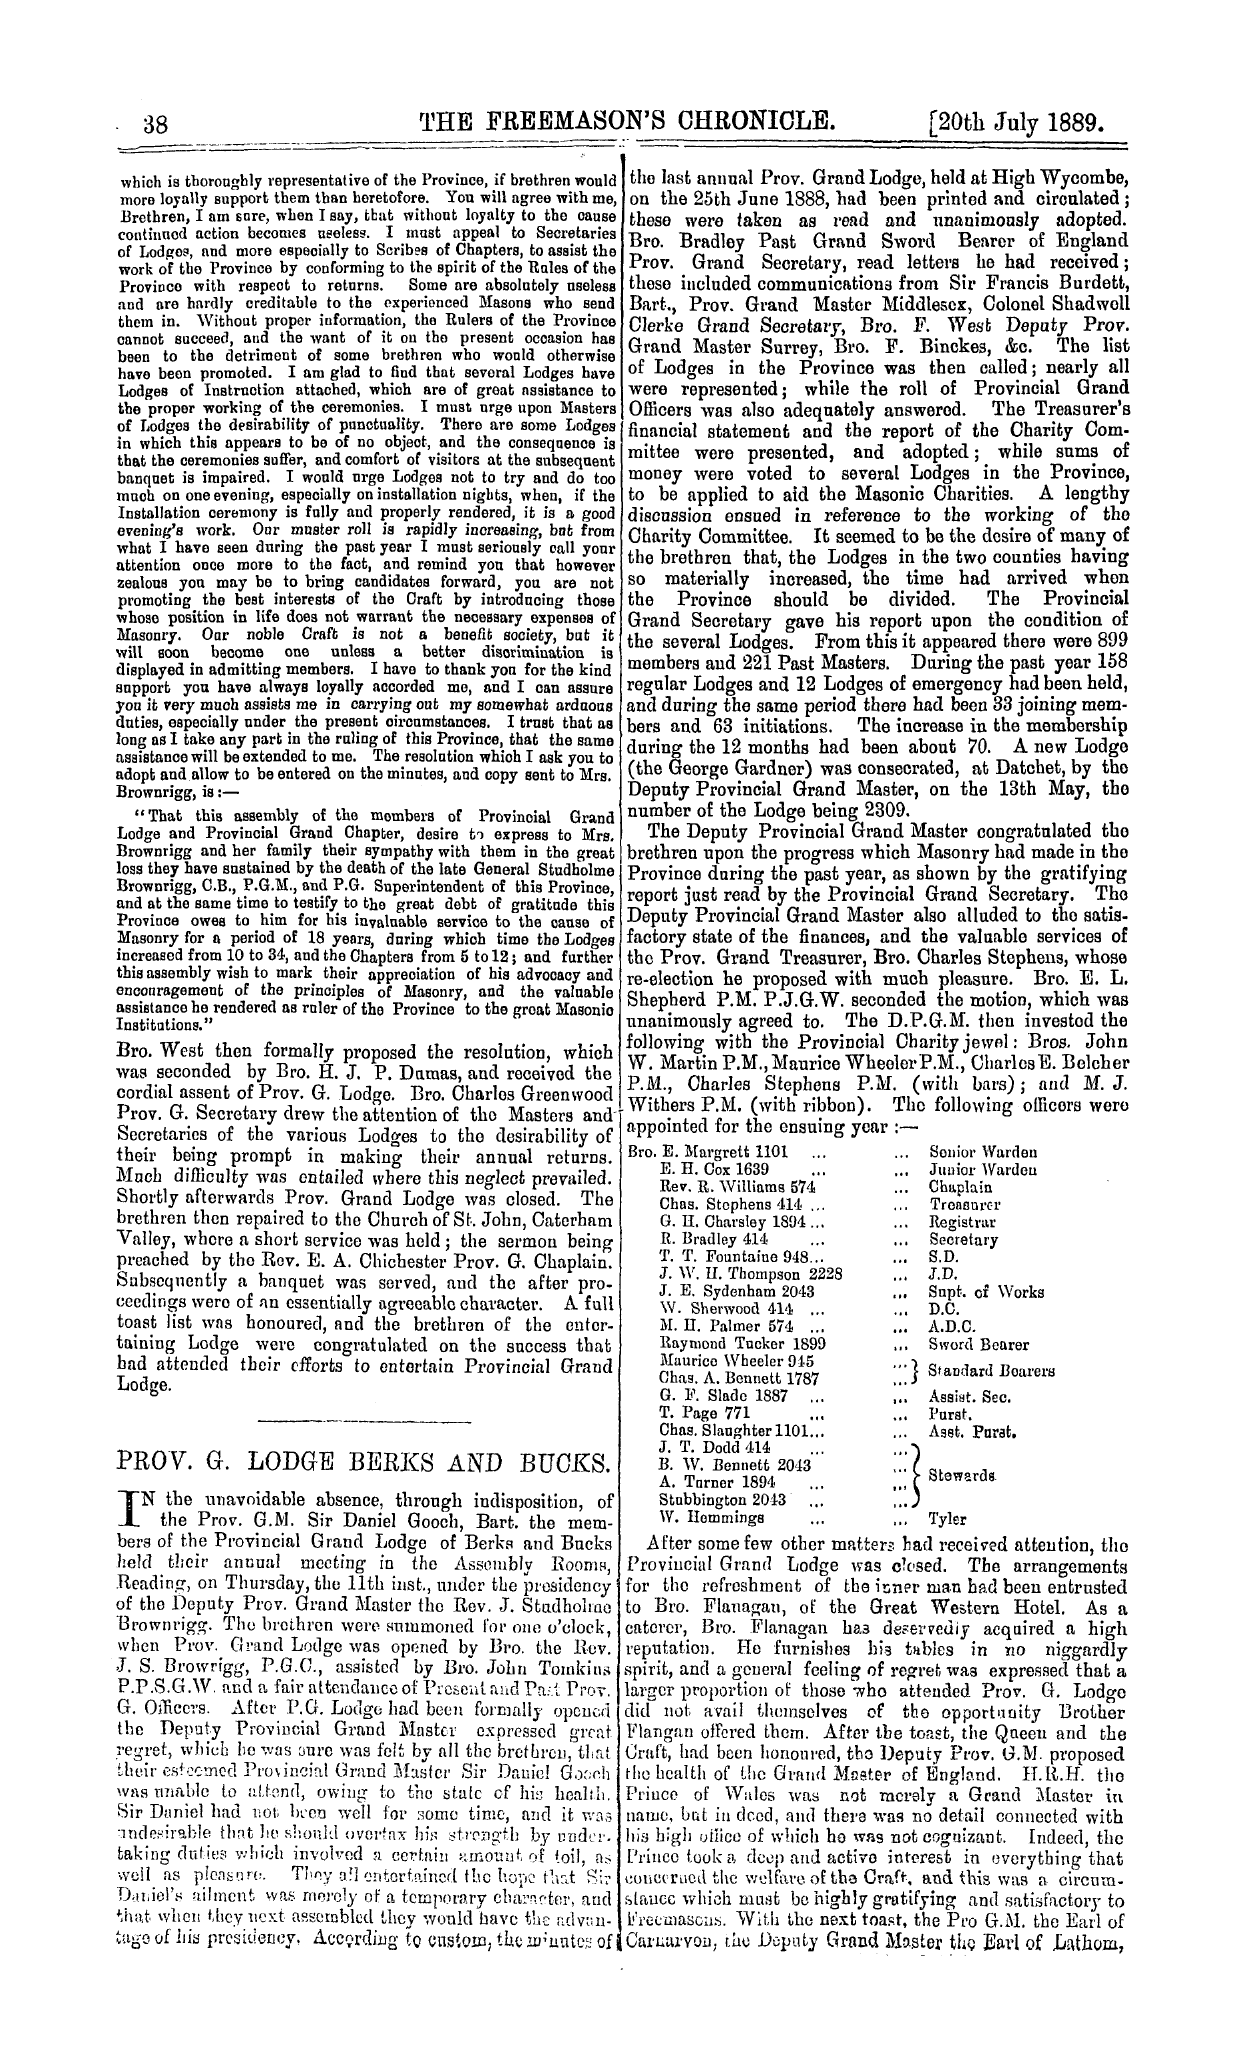 The Freemason's Chronicle: 1889-07-20 - Prov. G. Lodge Berks And Bucks.